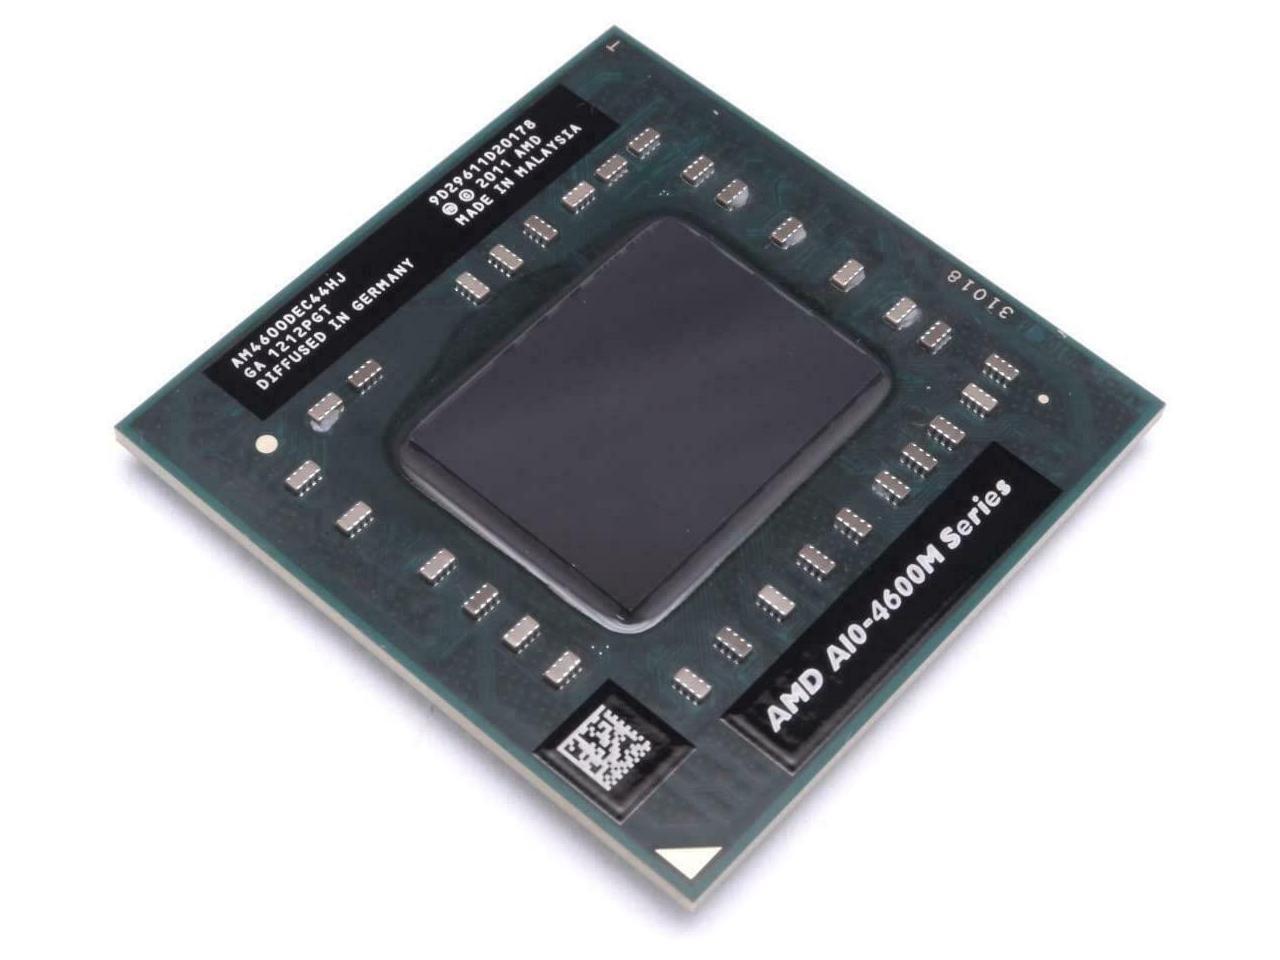 AMD a8 4500m. Процессор AMD am4500dec44hj a8-4500m 1.9 ГГЦ для ноутбука. A8-4500m. Процессор AMD am4600dec44hj. Сокет fs1